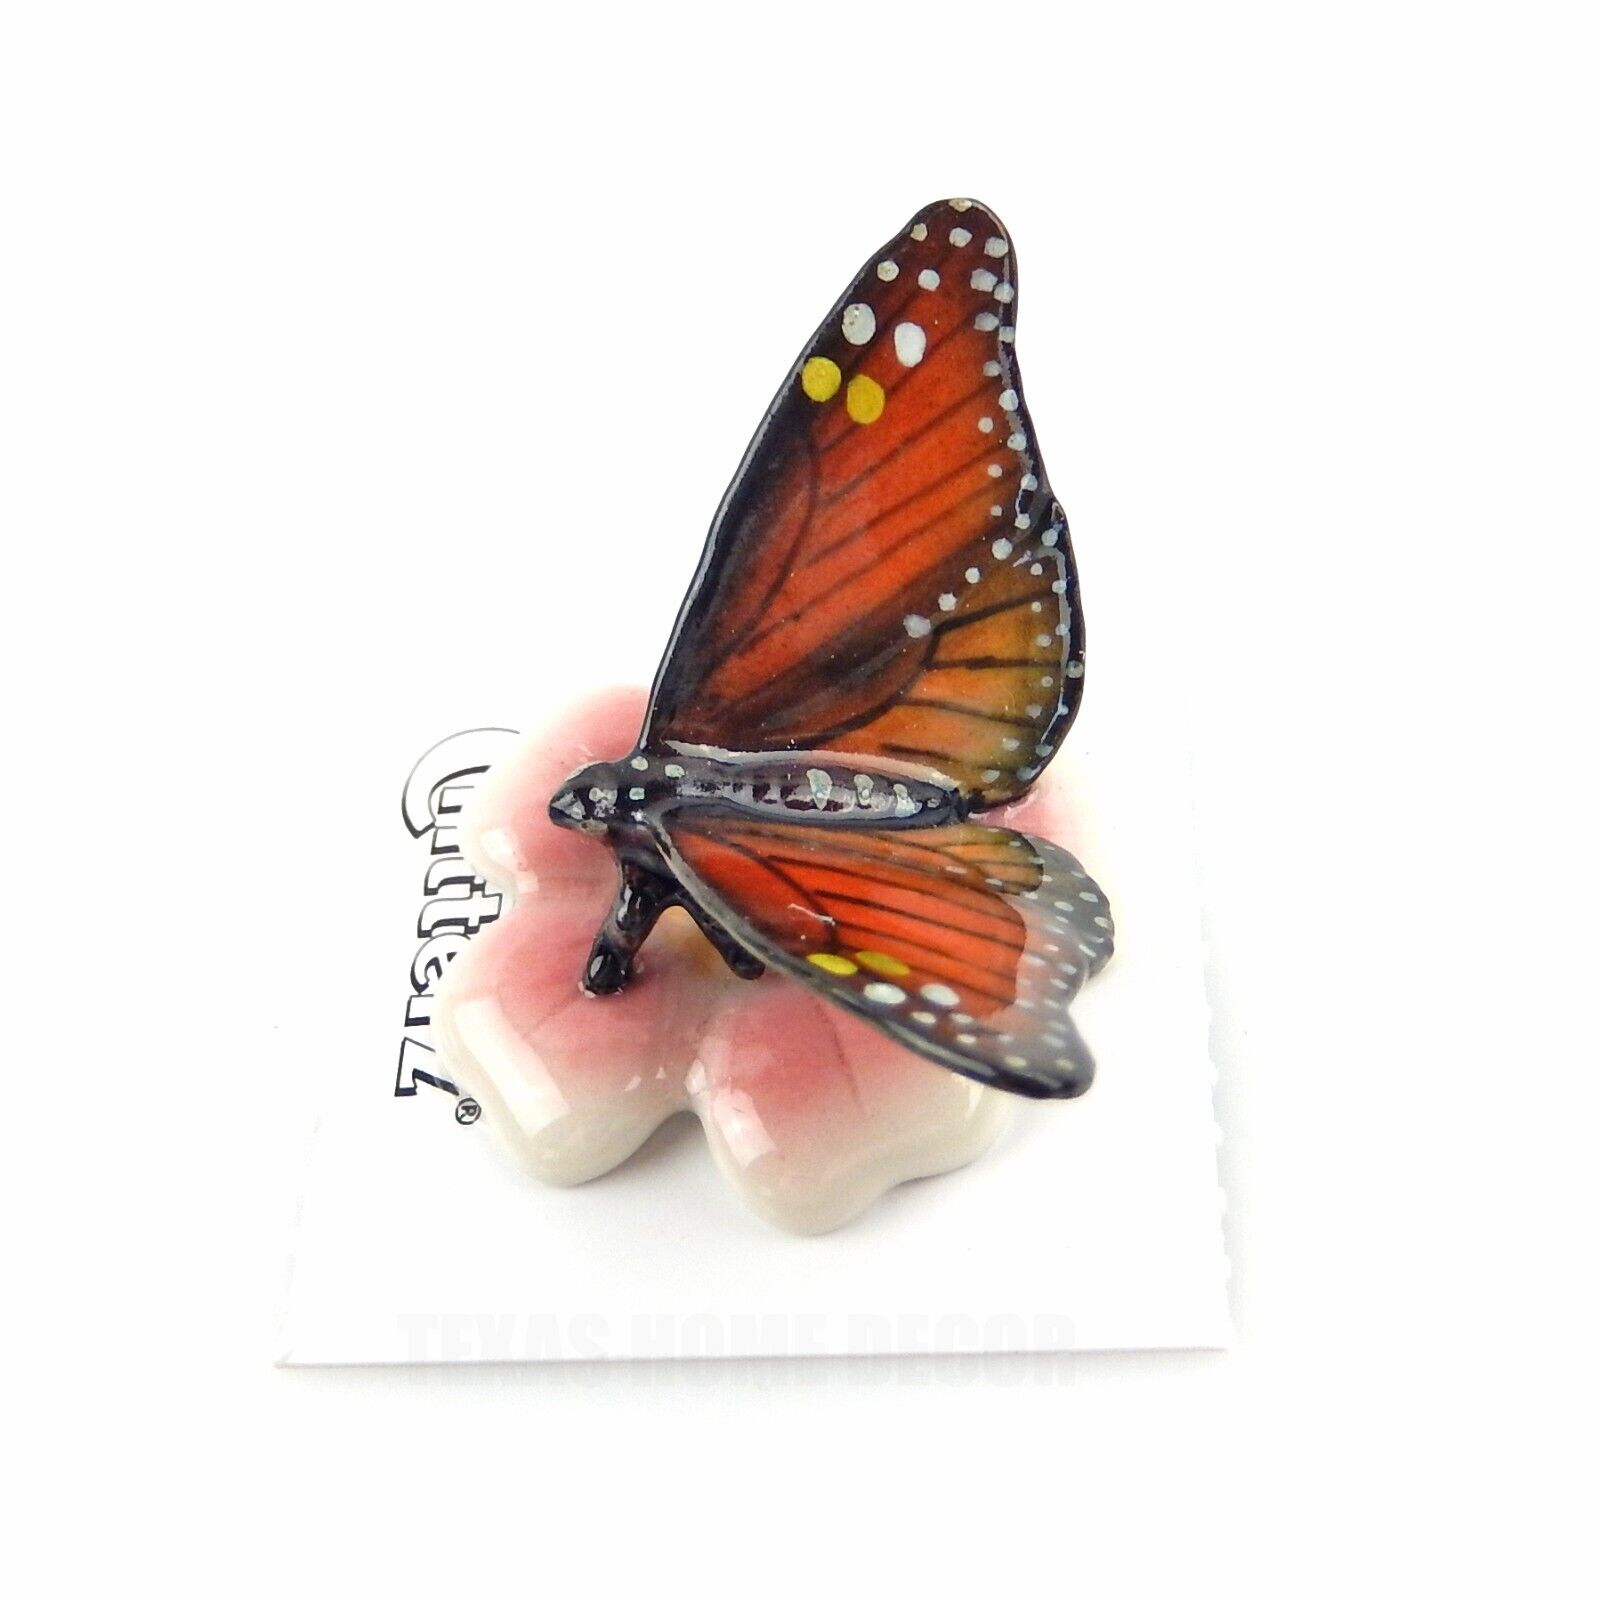 Little Critterz Miniature Collectors Monarch Butterfly Porcelain Figurine